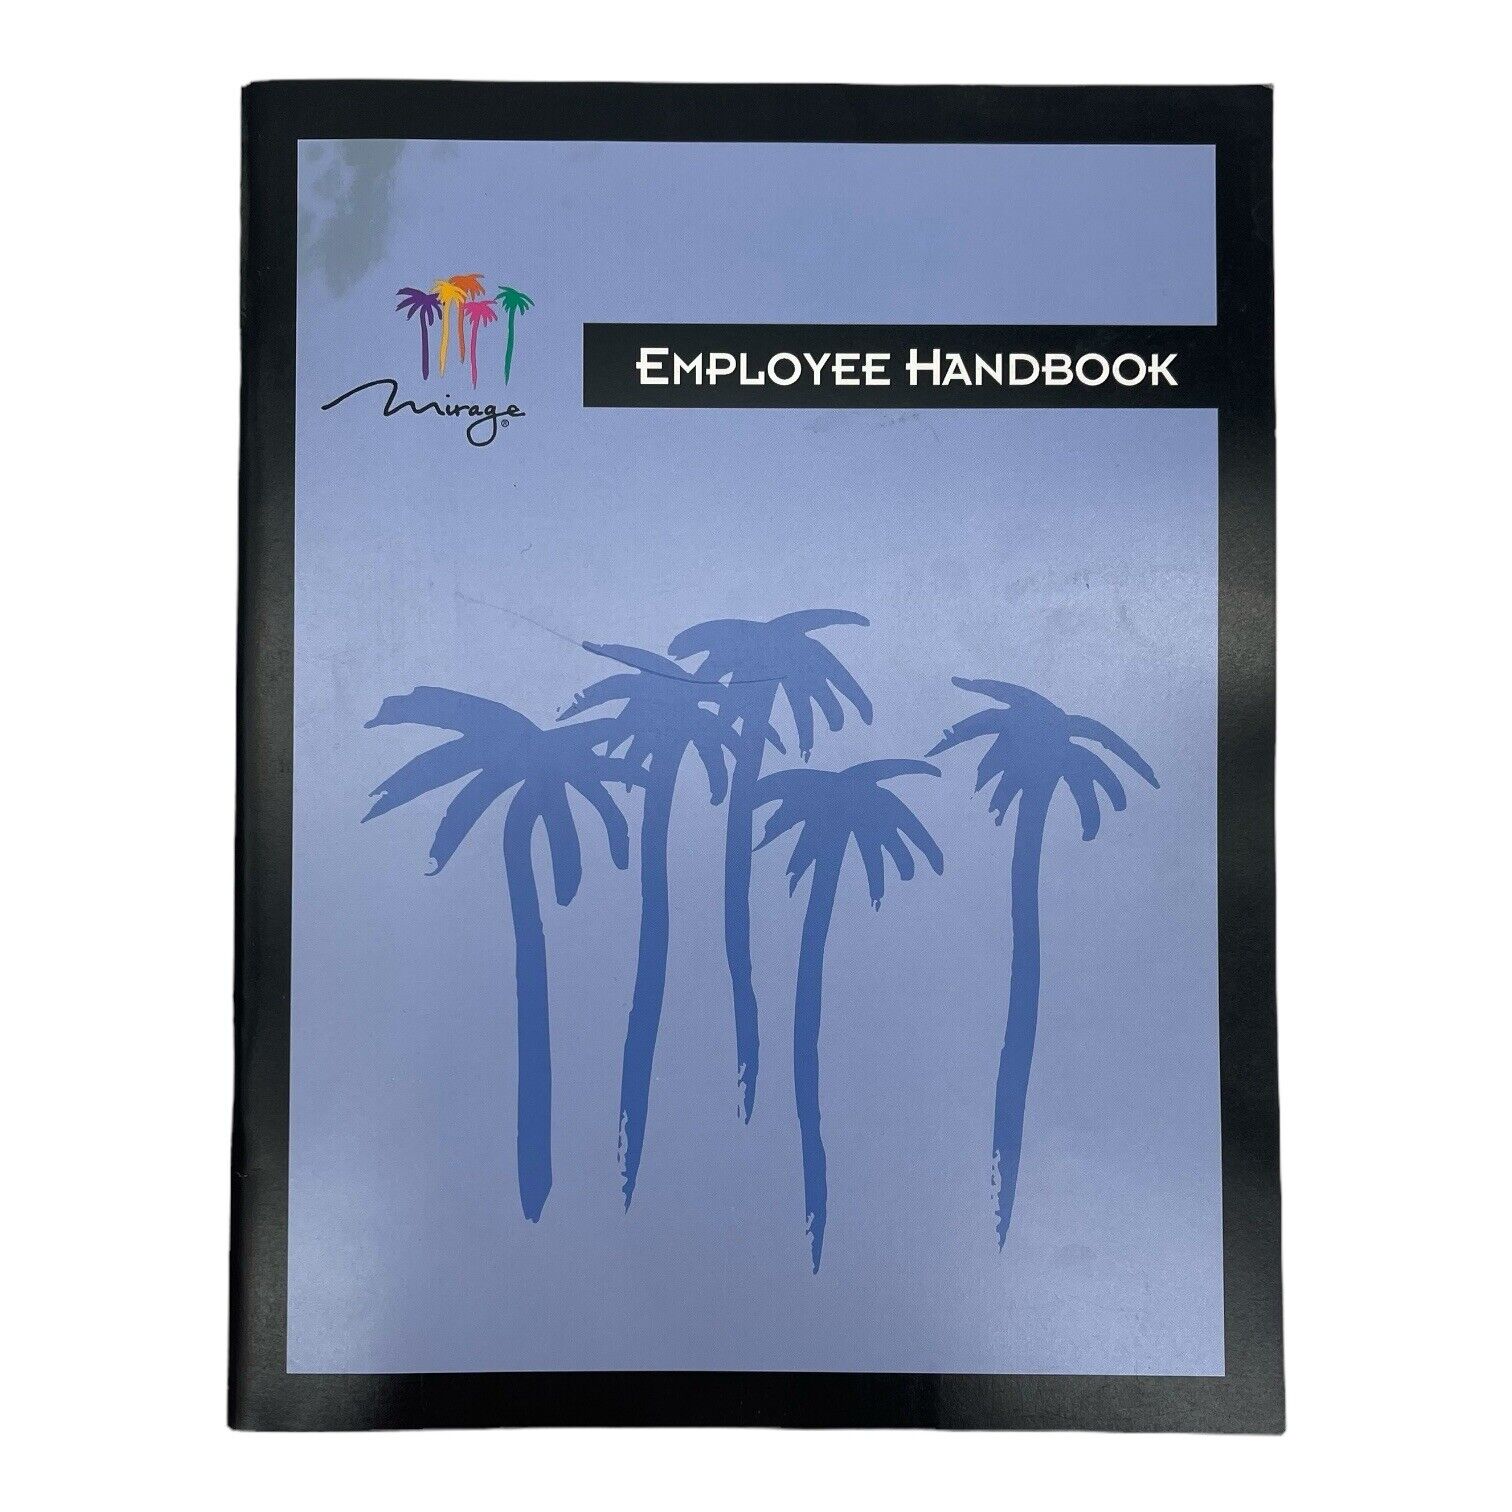 1998 Vintage Employee Handbook Mirage Hotel & Casino Las Vegas